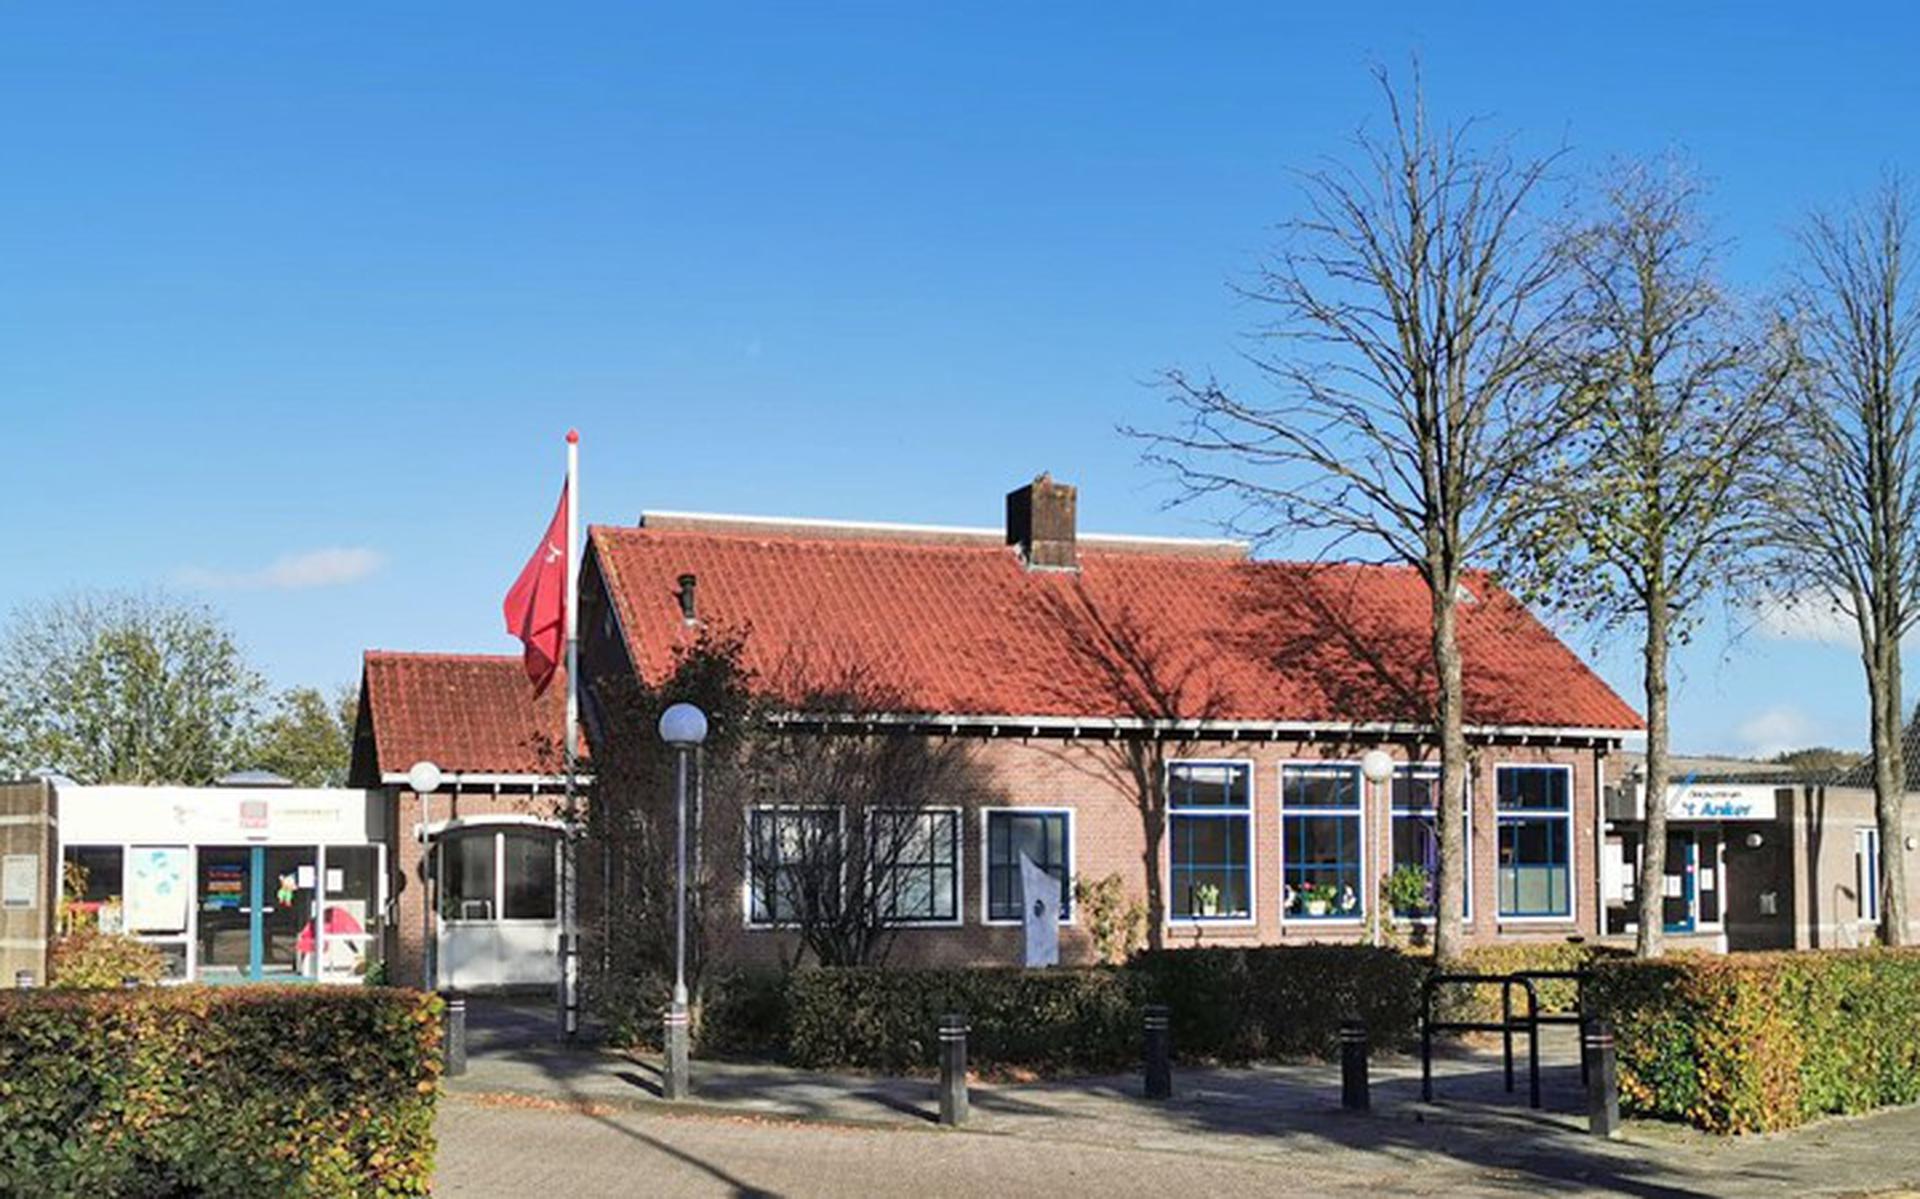 Dorpshuis 't Anker in Hollandscheveld.